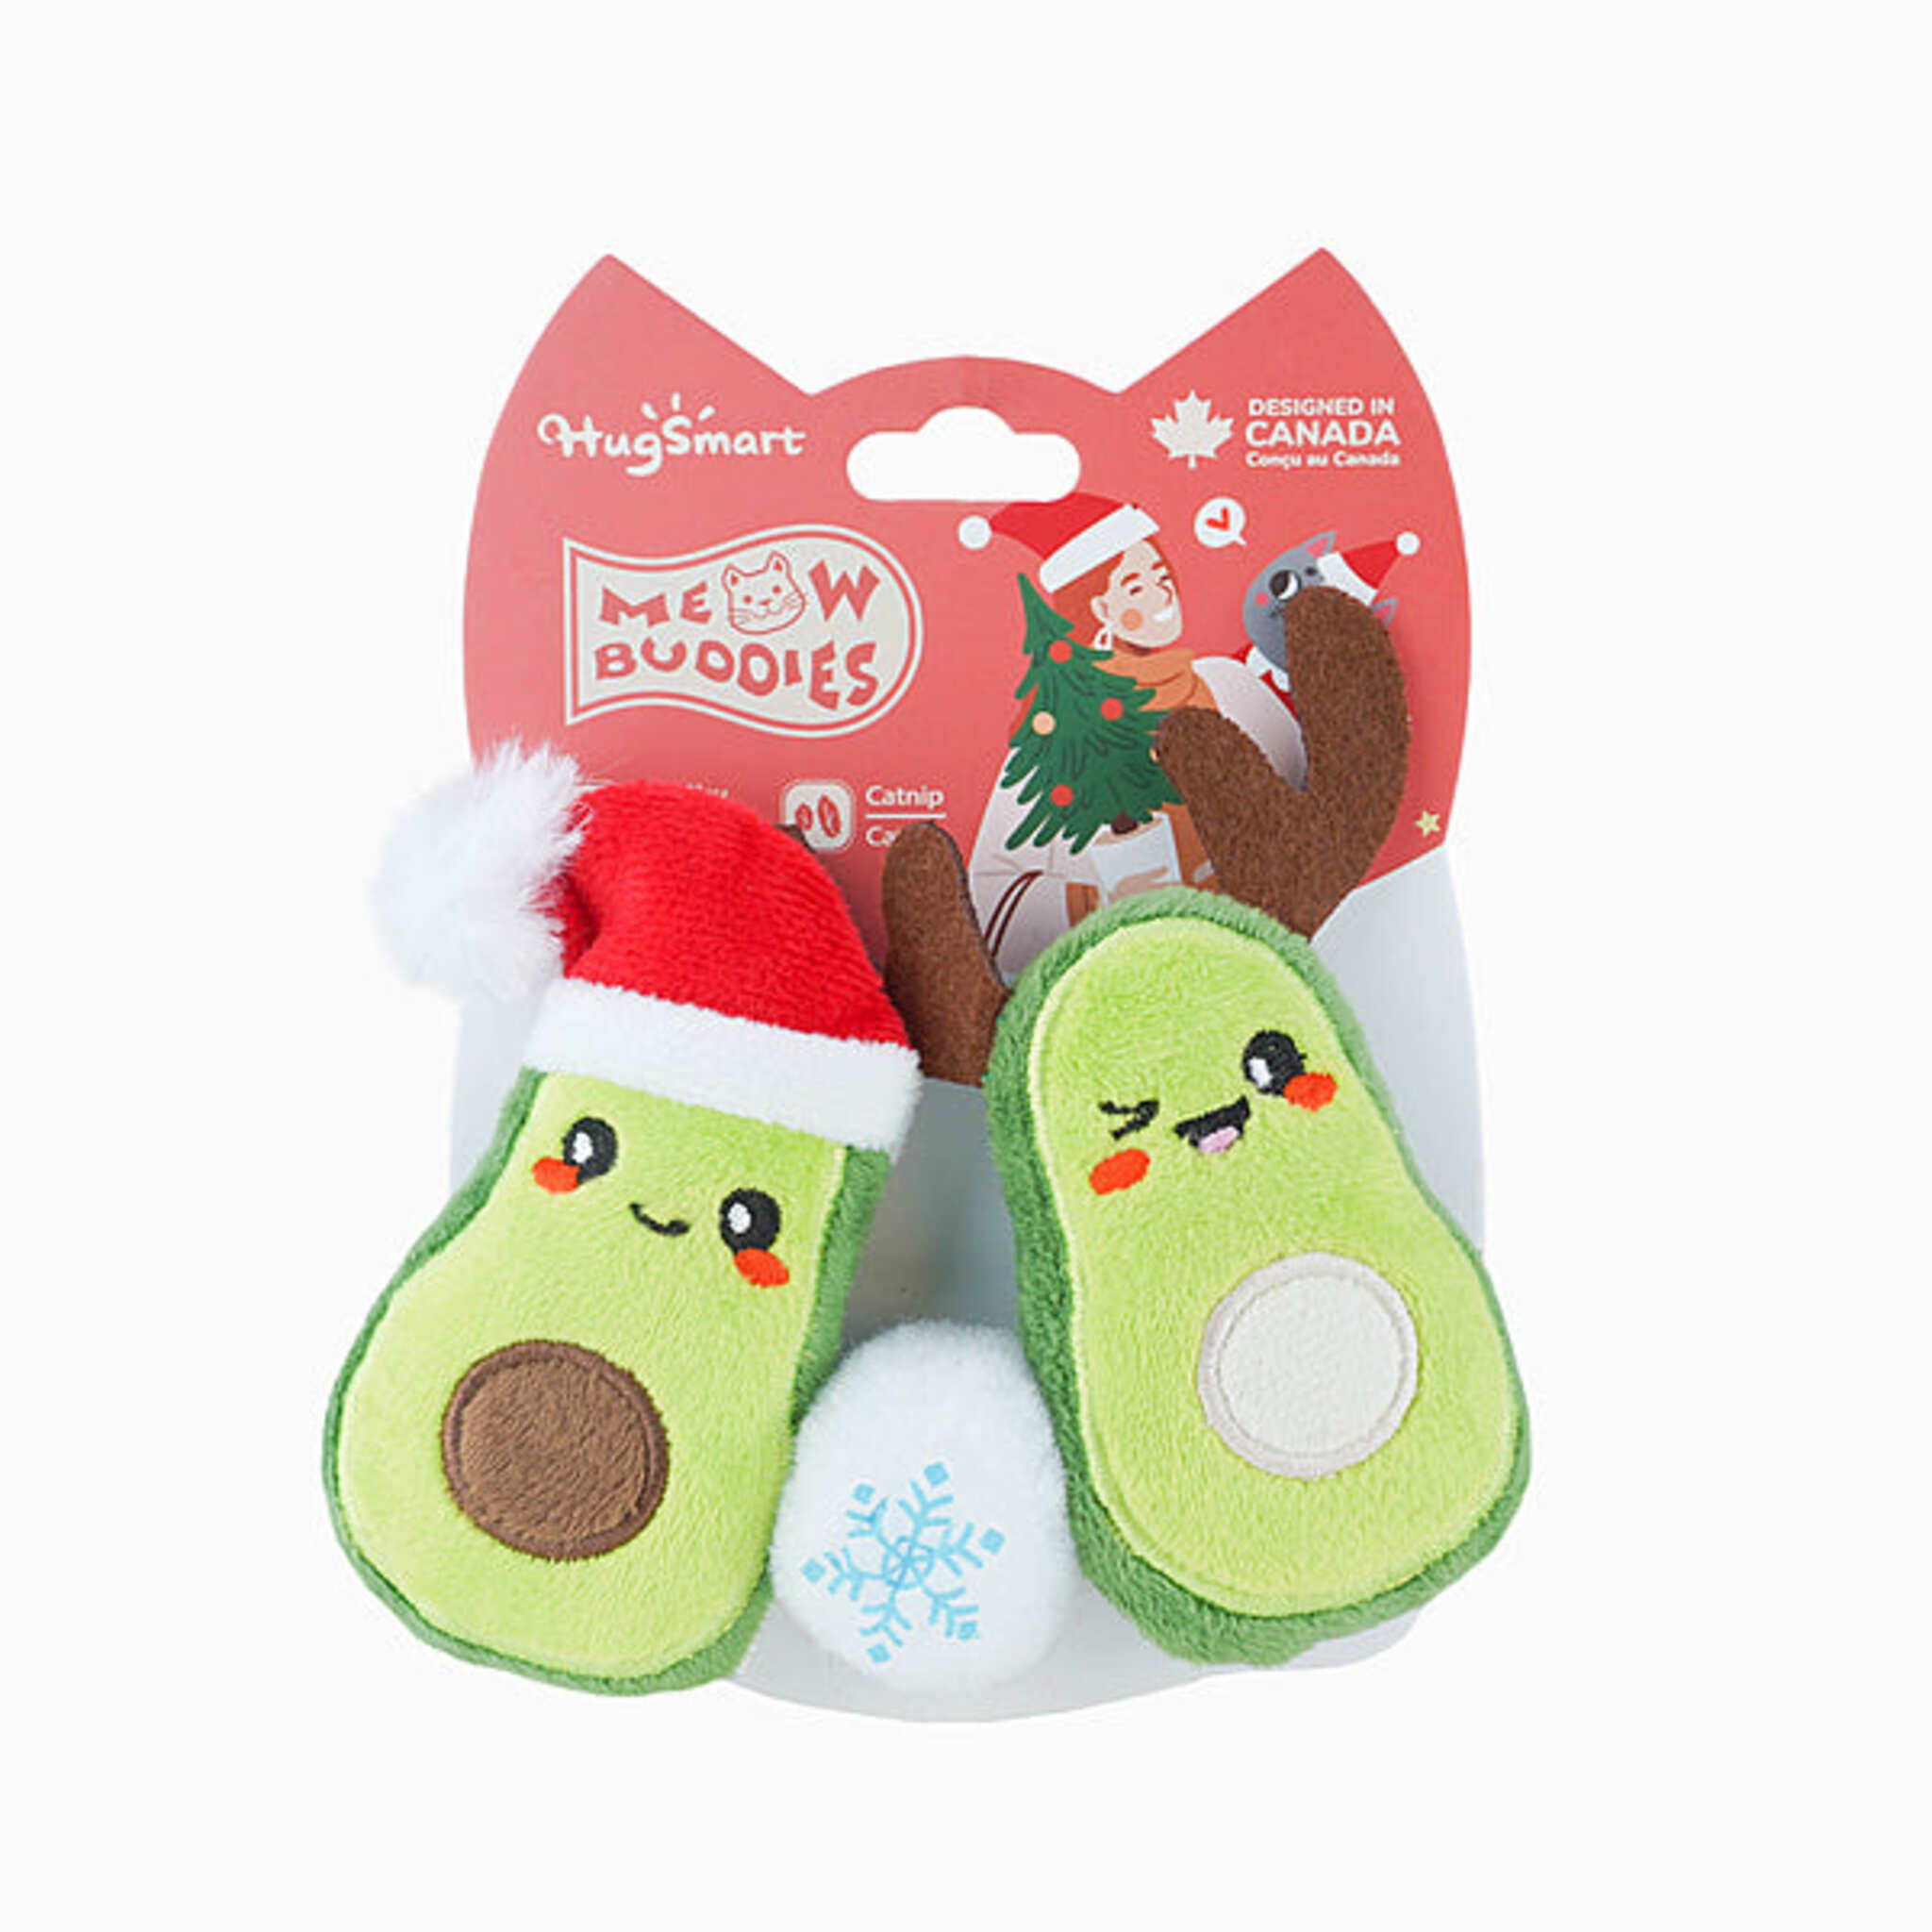 Hugsmart Meow Buddies Christmas Avocado Cat Toy 3 Pack